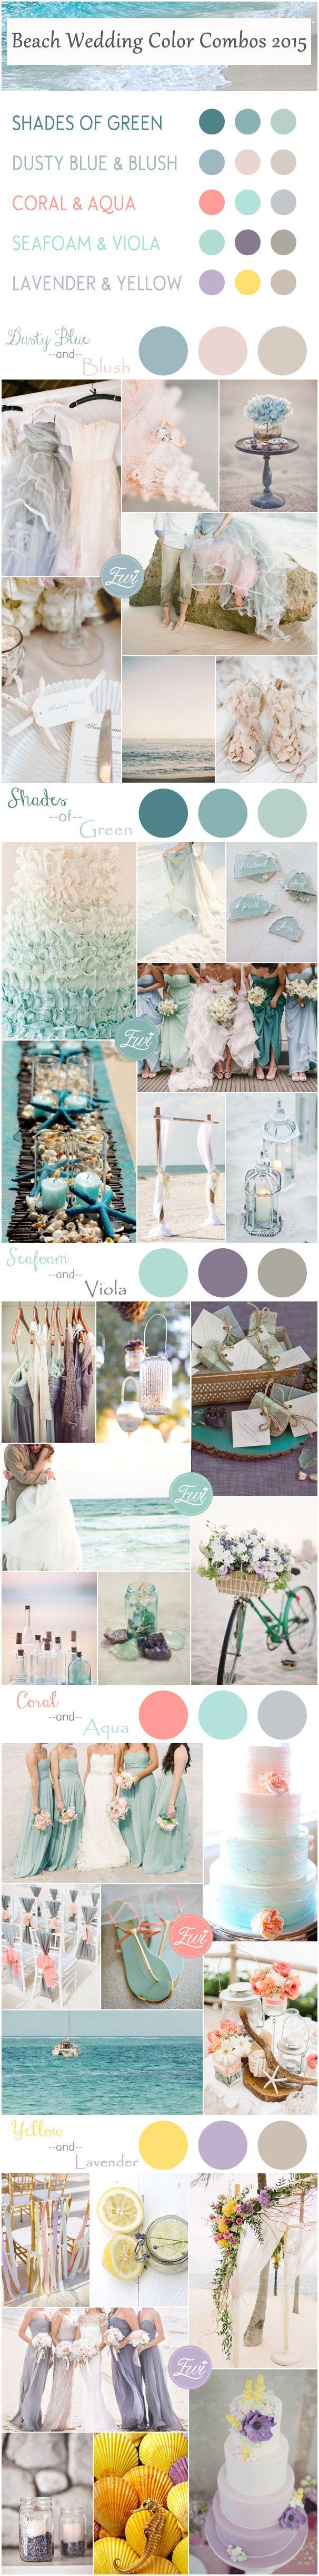 Hochzeit - Top 5 Beach Wedding Color Ideas For Summer 2015